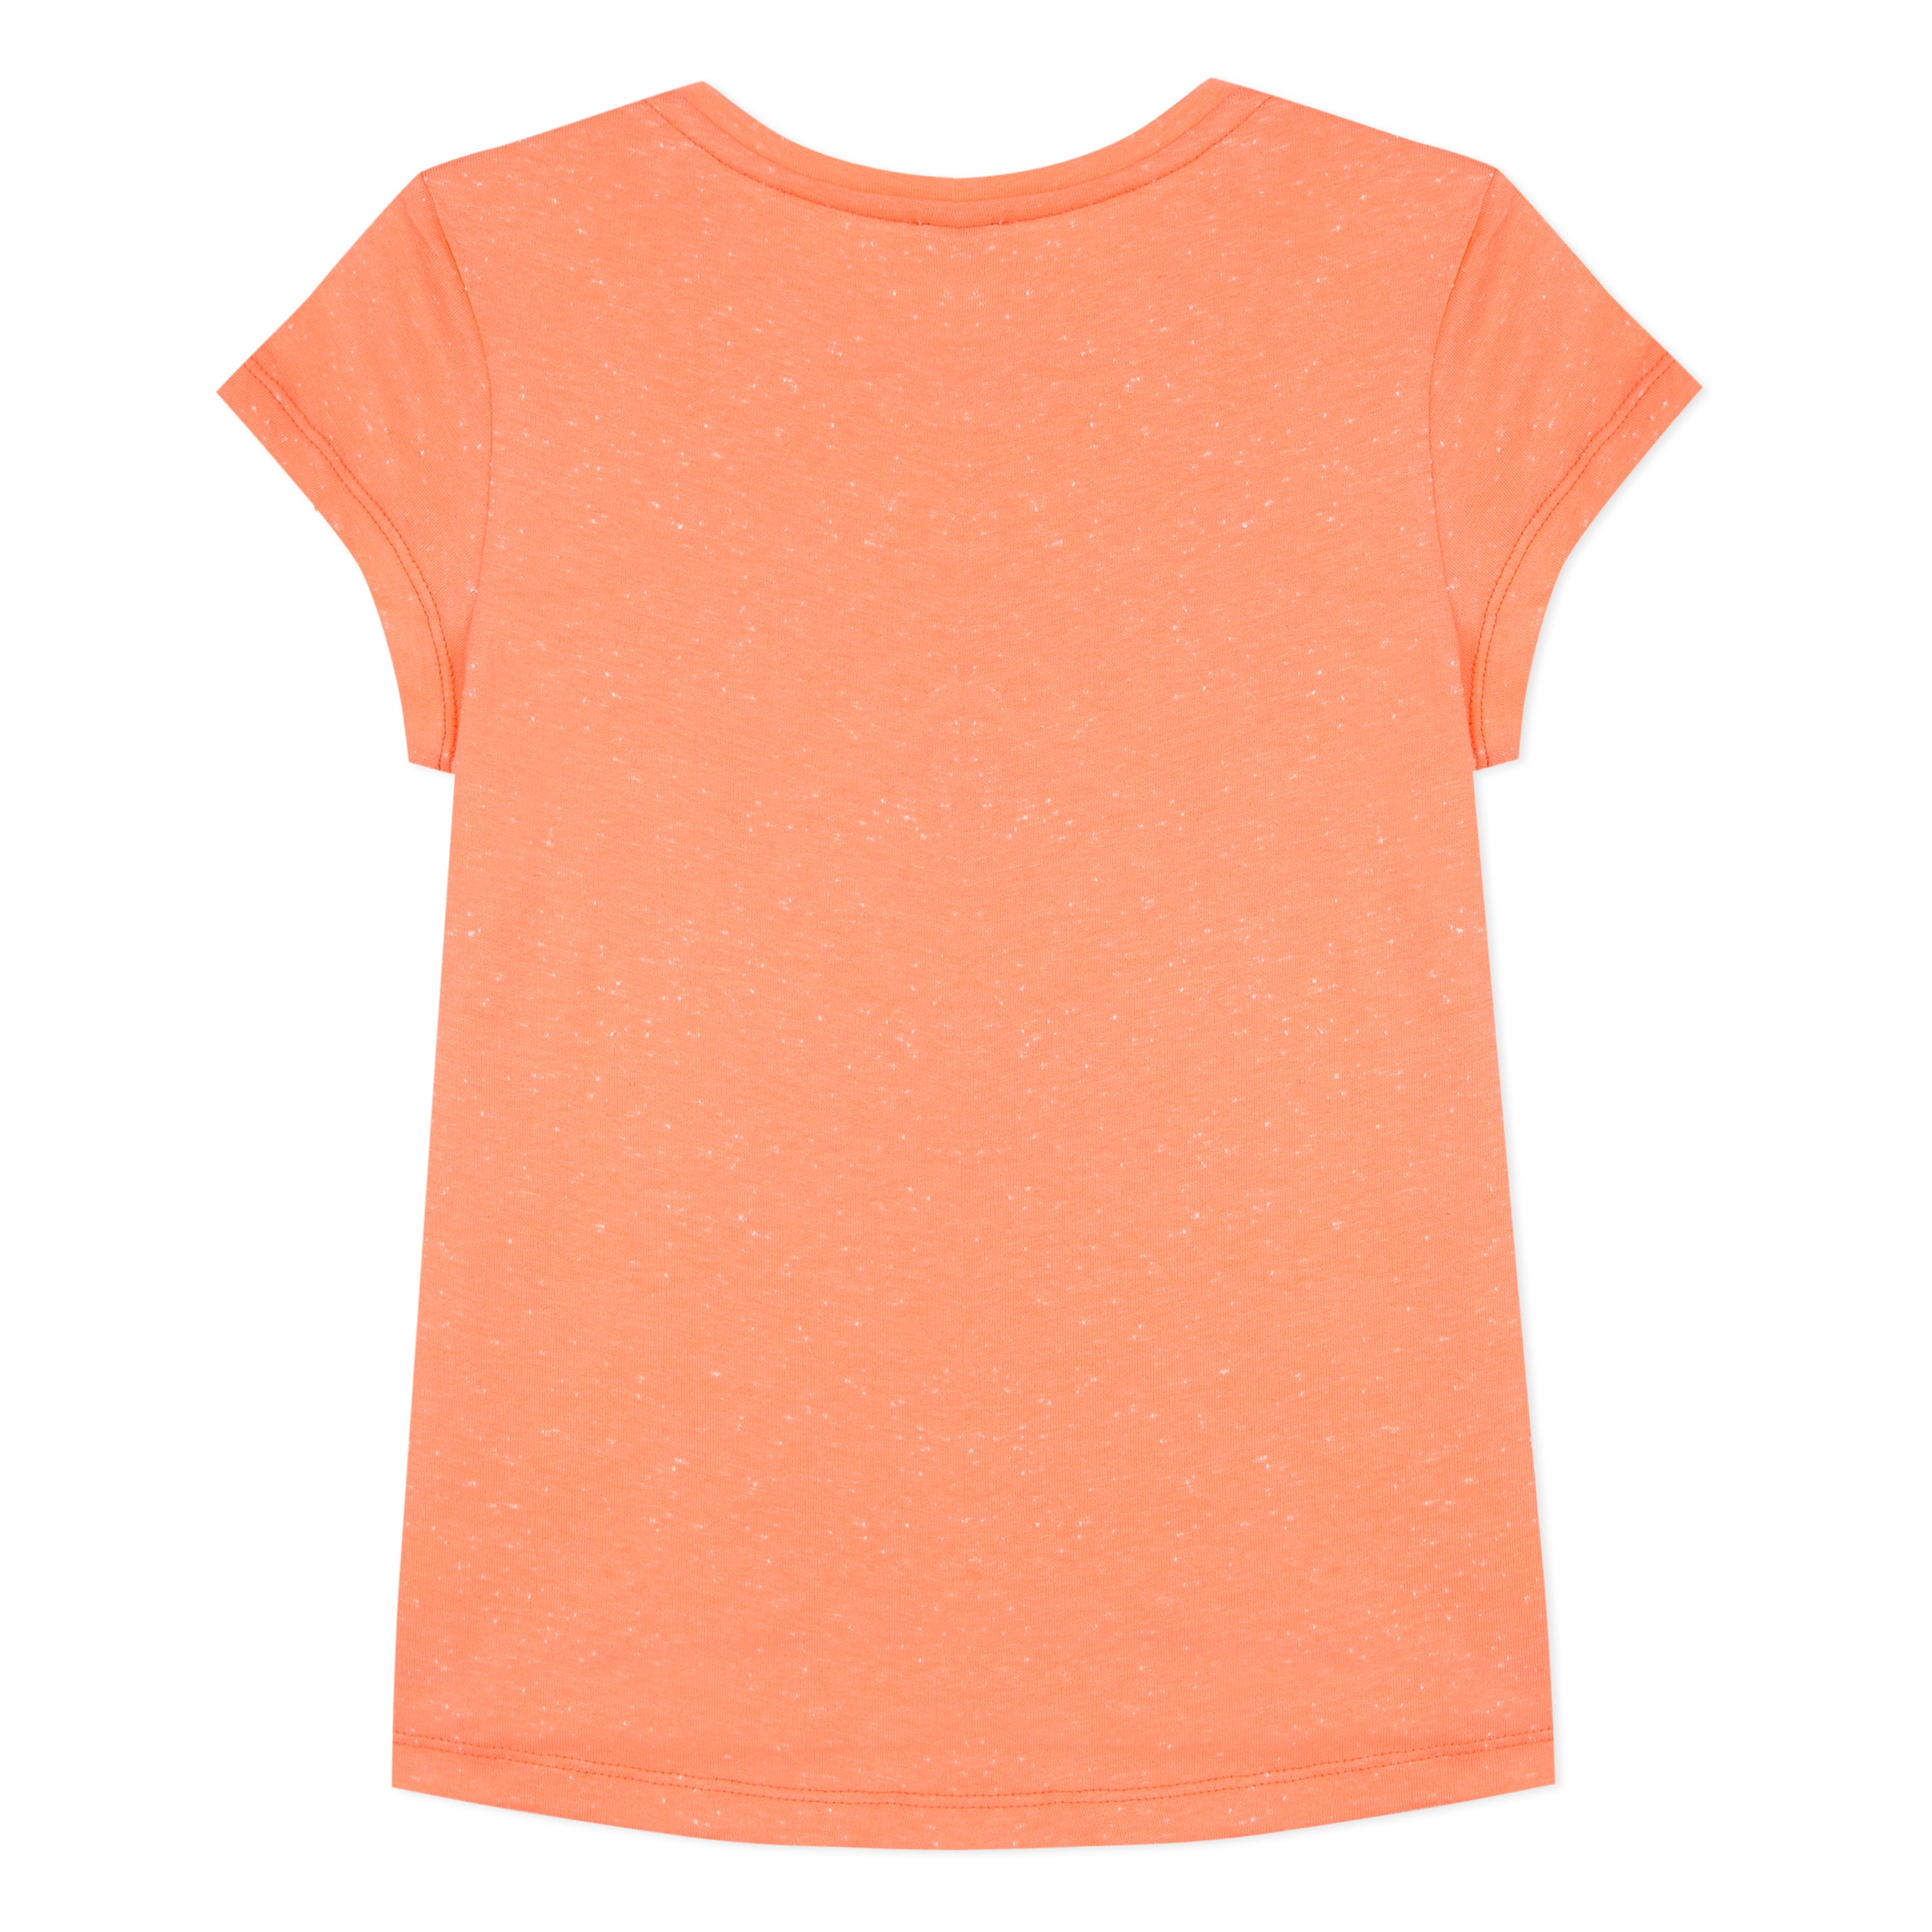 Girls Orange Cotton T-shirt